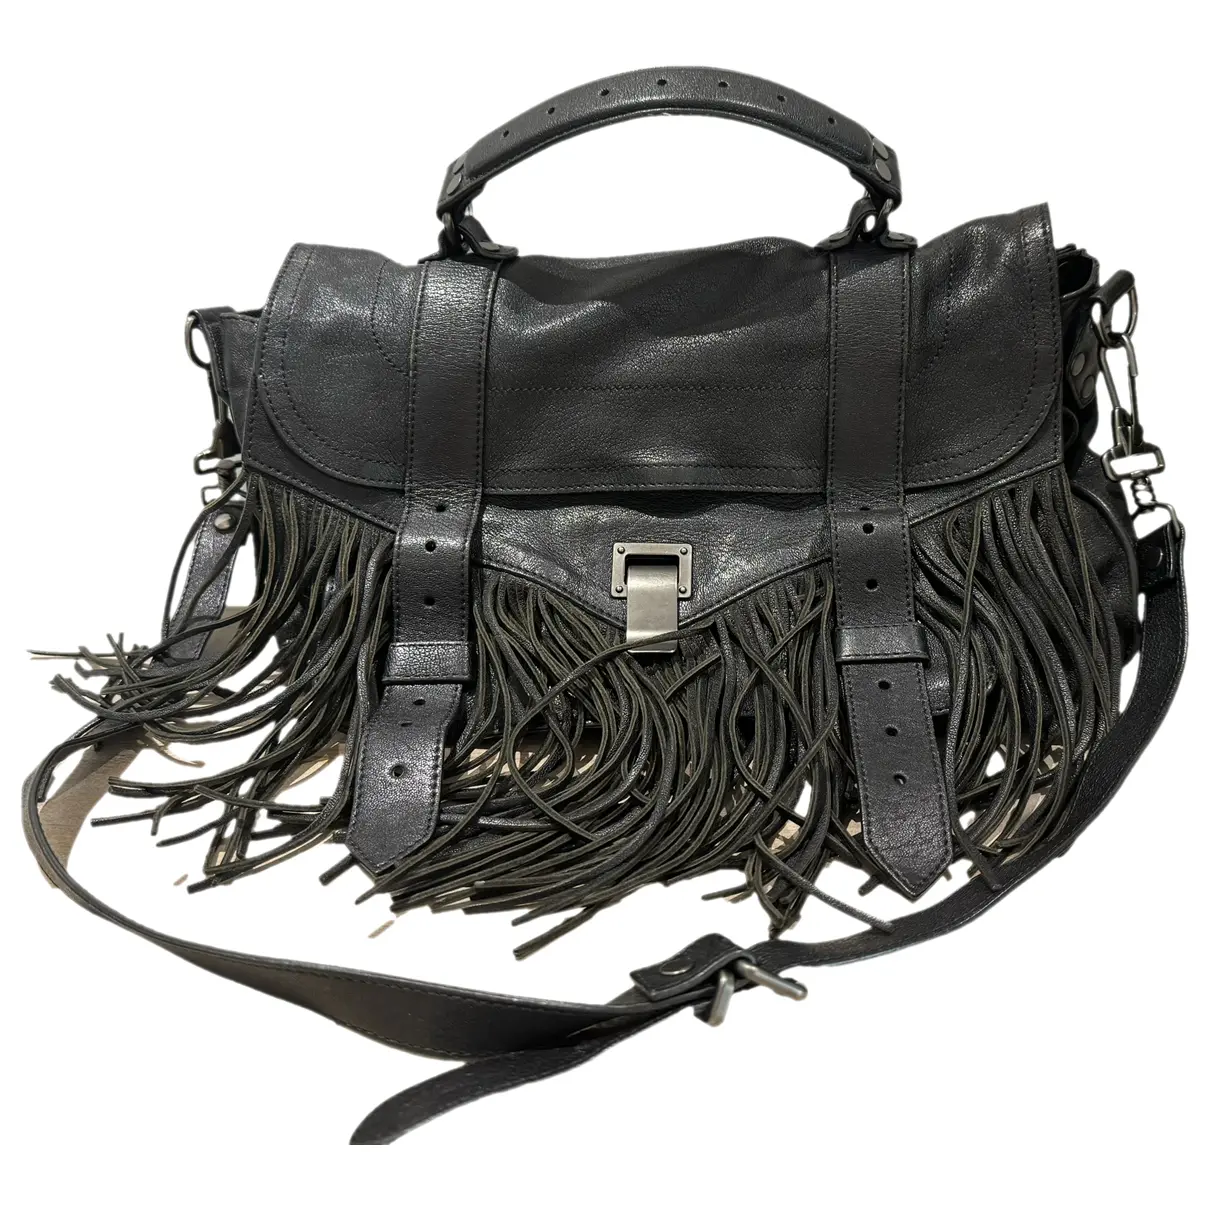 PS11 leather satchel